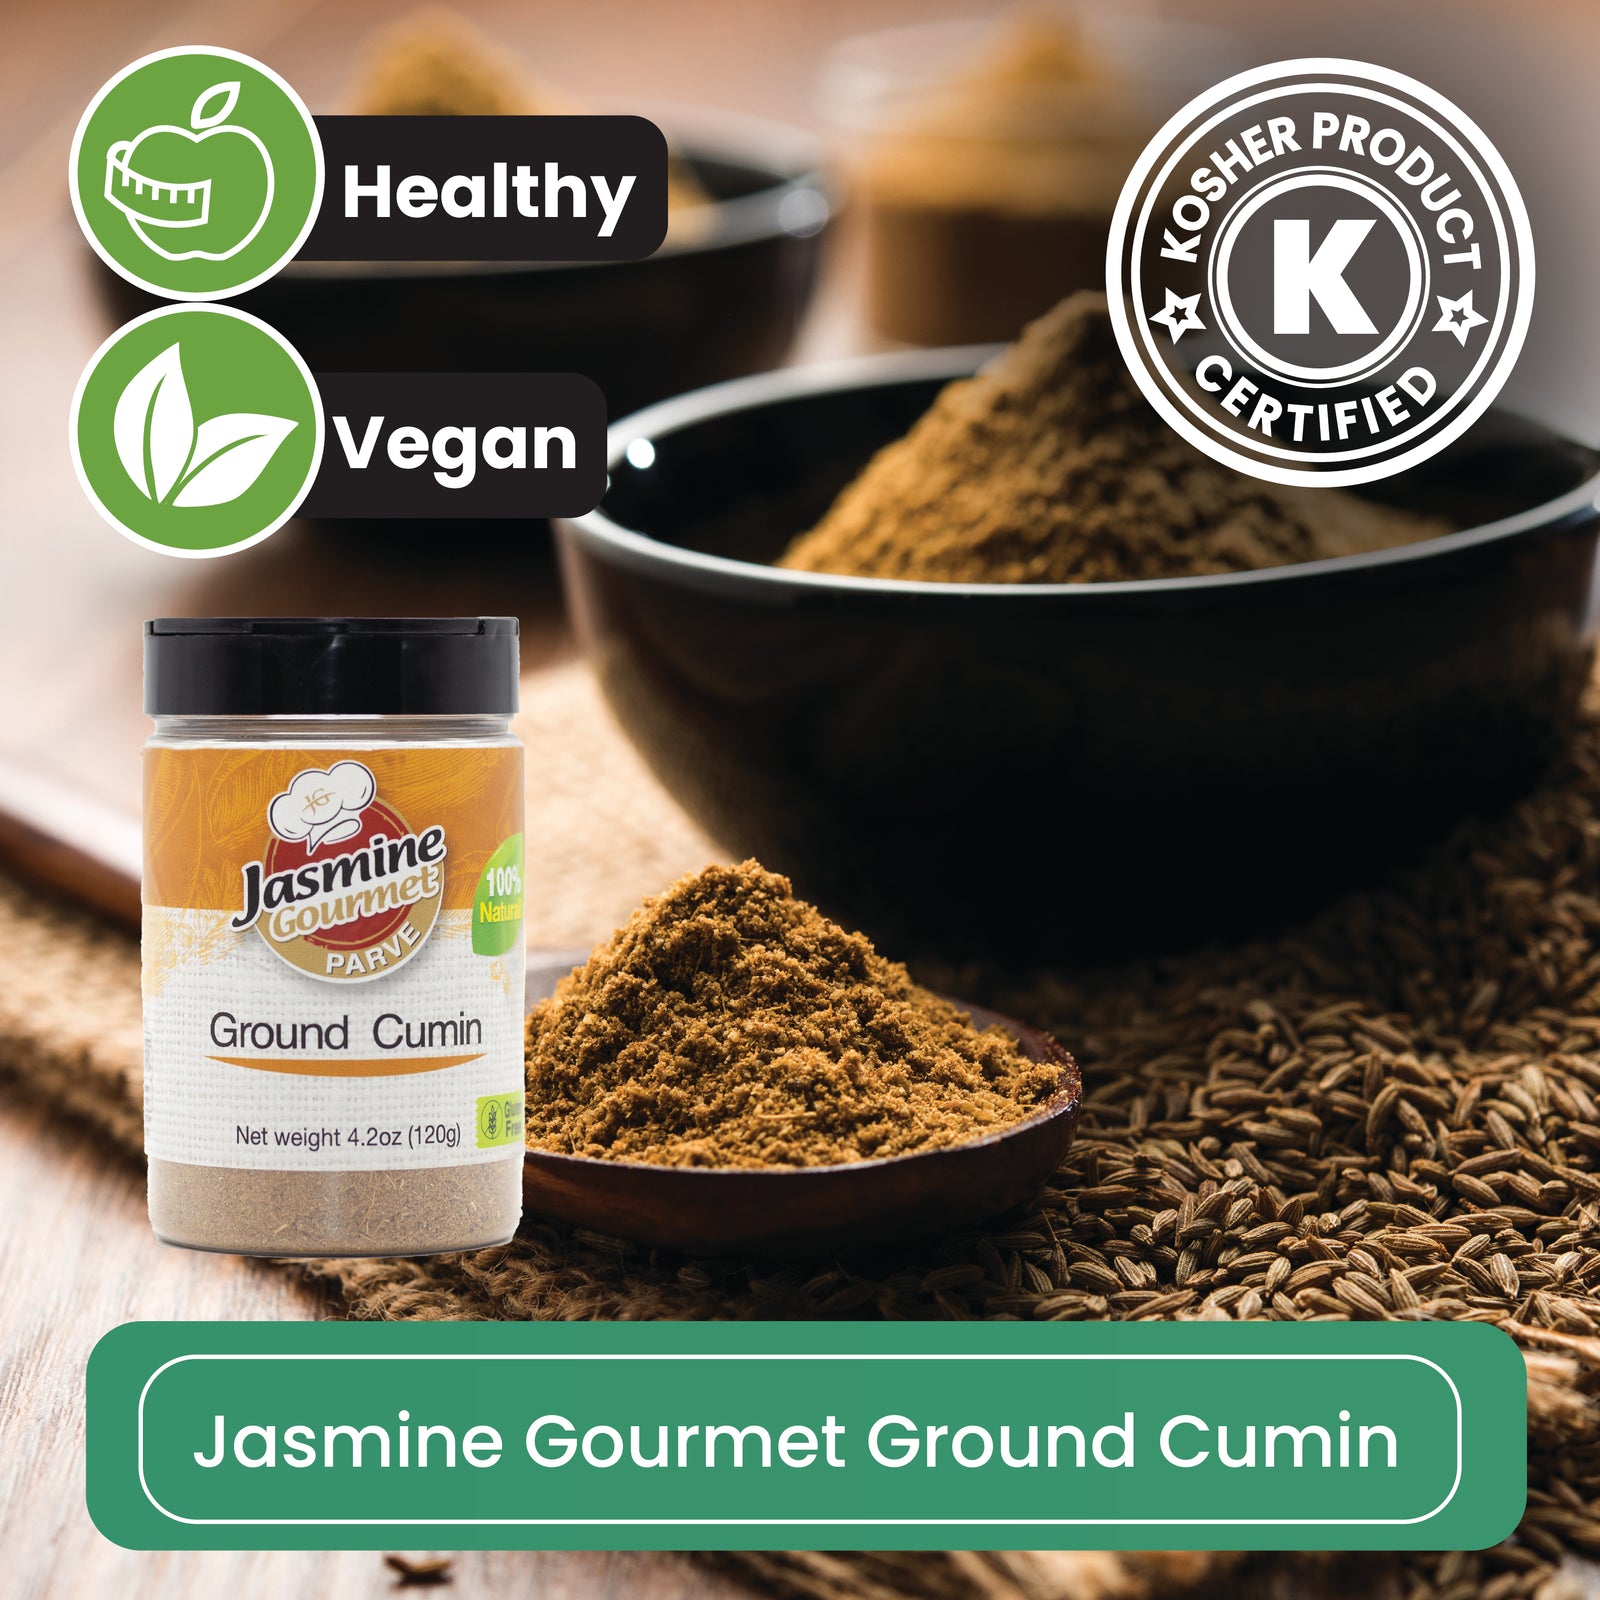 Jasmine Gourmet Ground Cumin